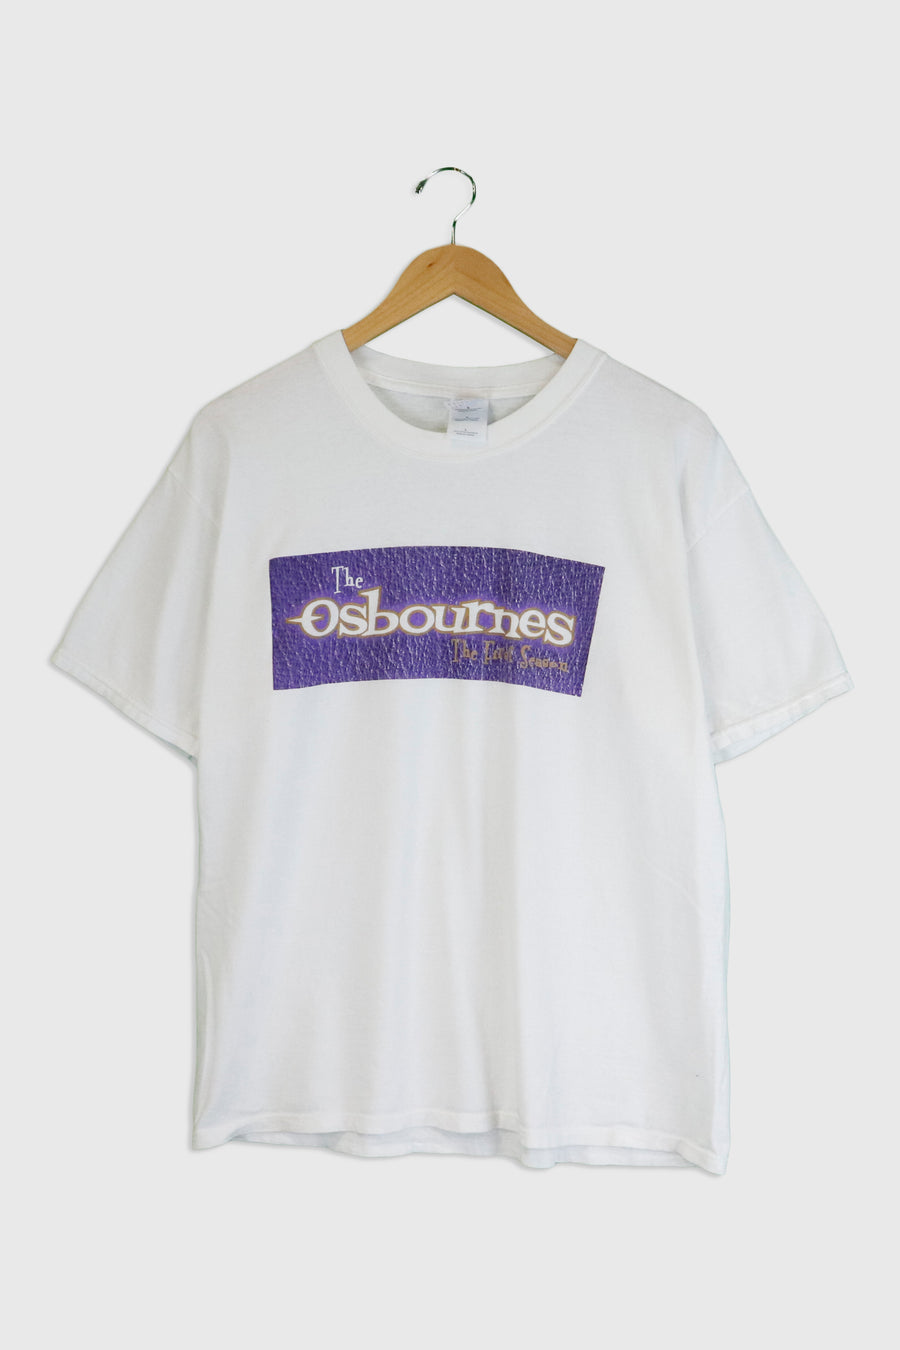 Vintage Osbournes Tv Show T Shirt